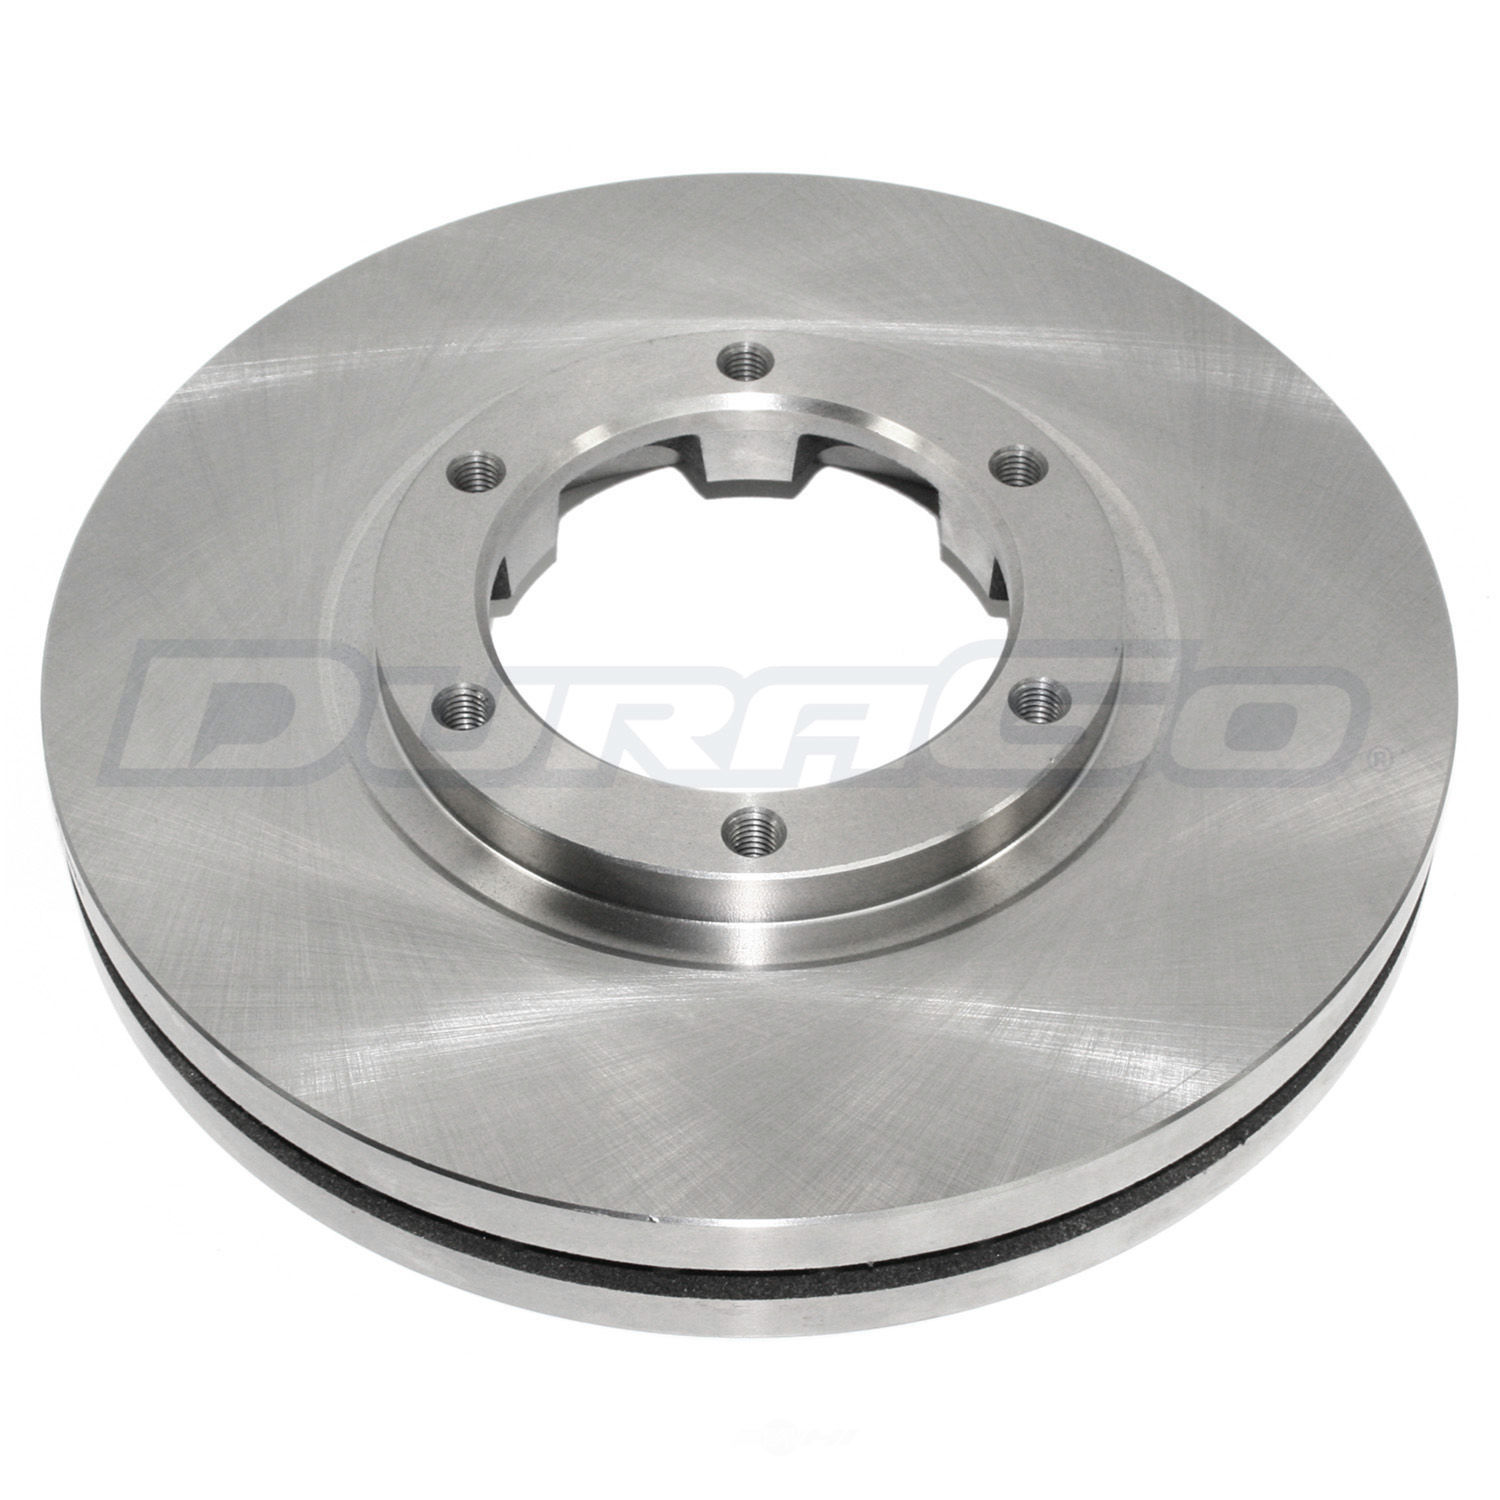 DURAGO - Disc Brake Rotor - D48 BR901566